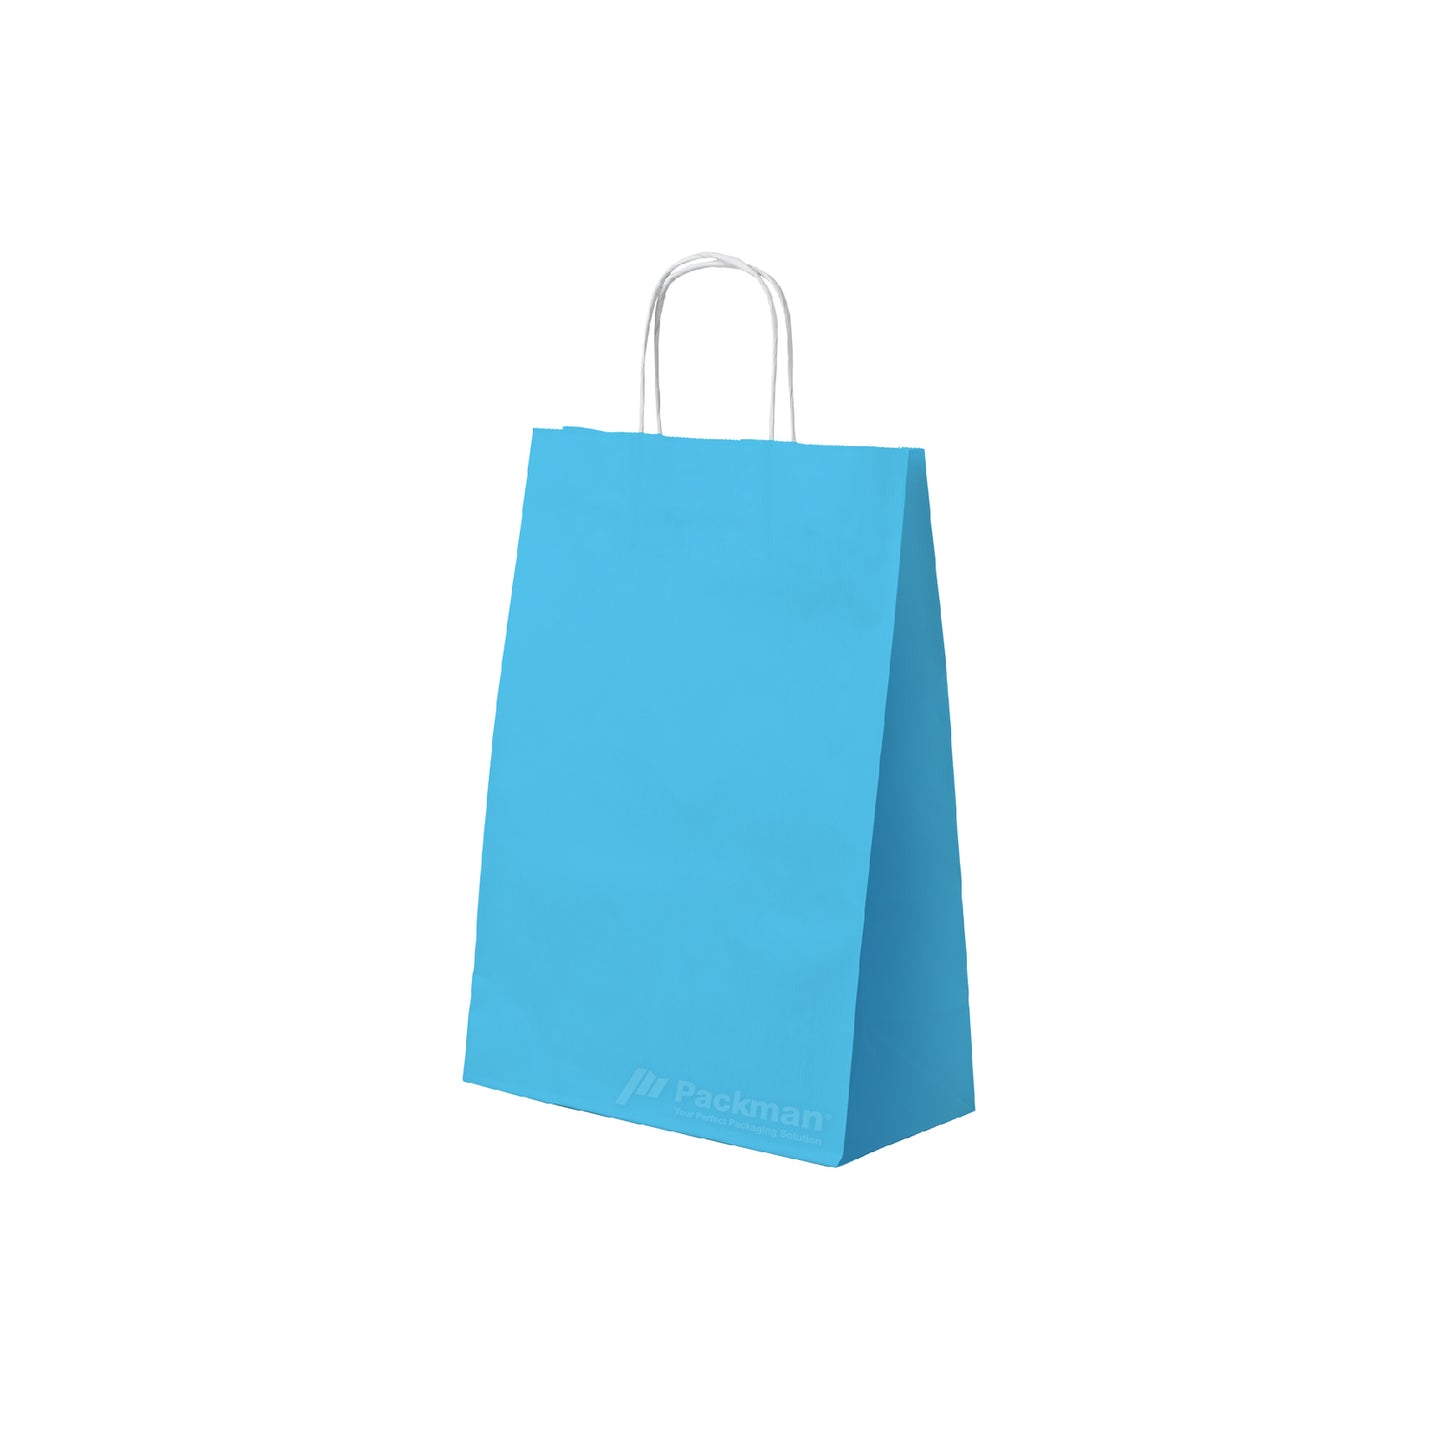 25 x 12 x 32cm Blue Paper Bag (100pcs)